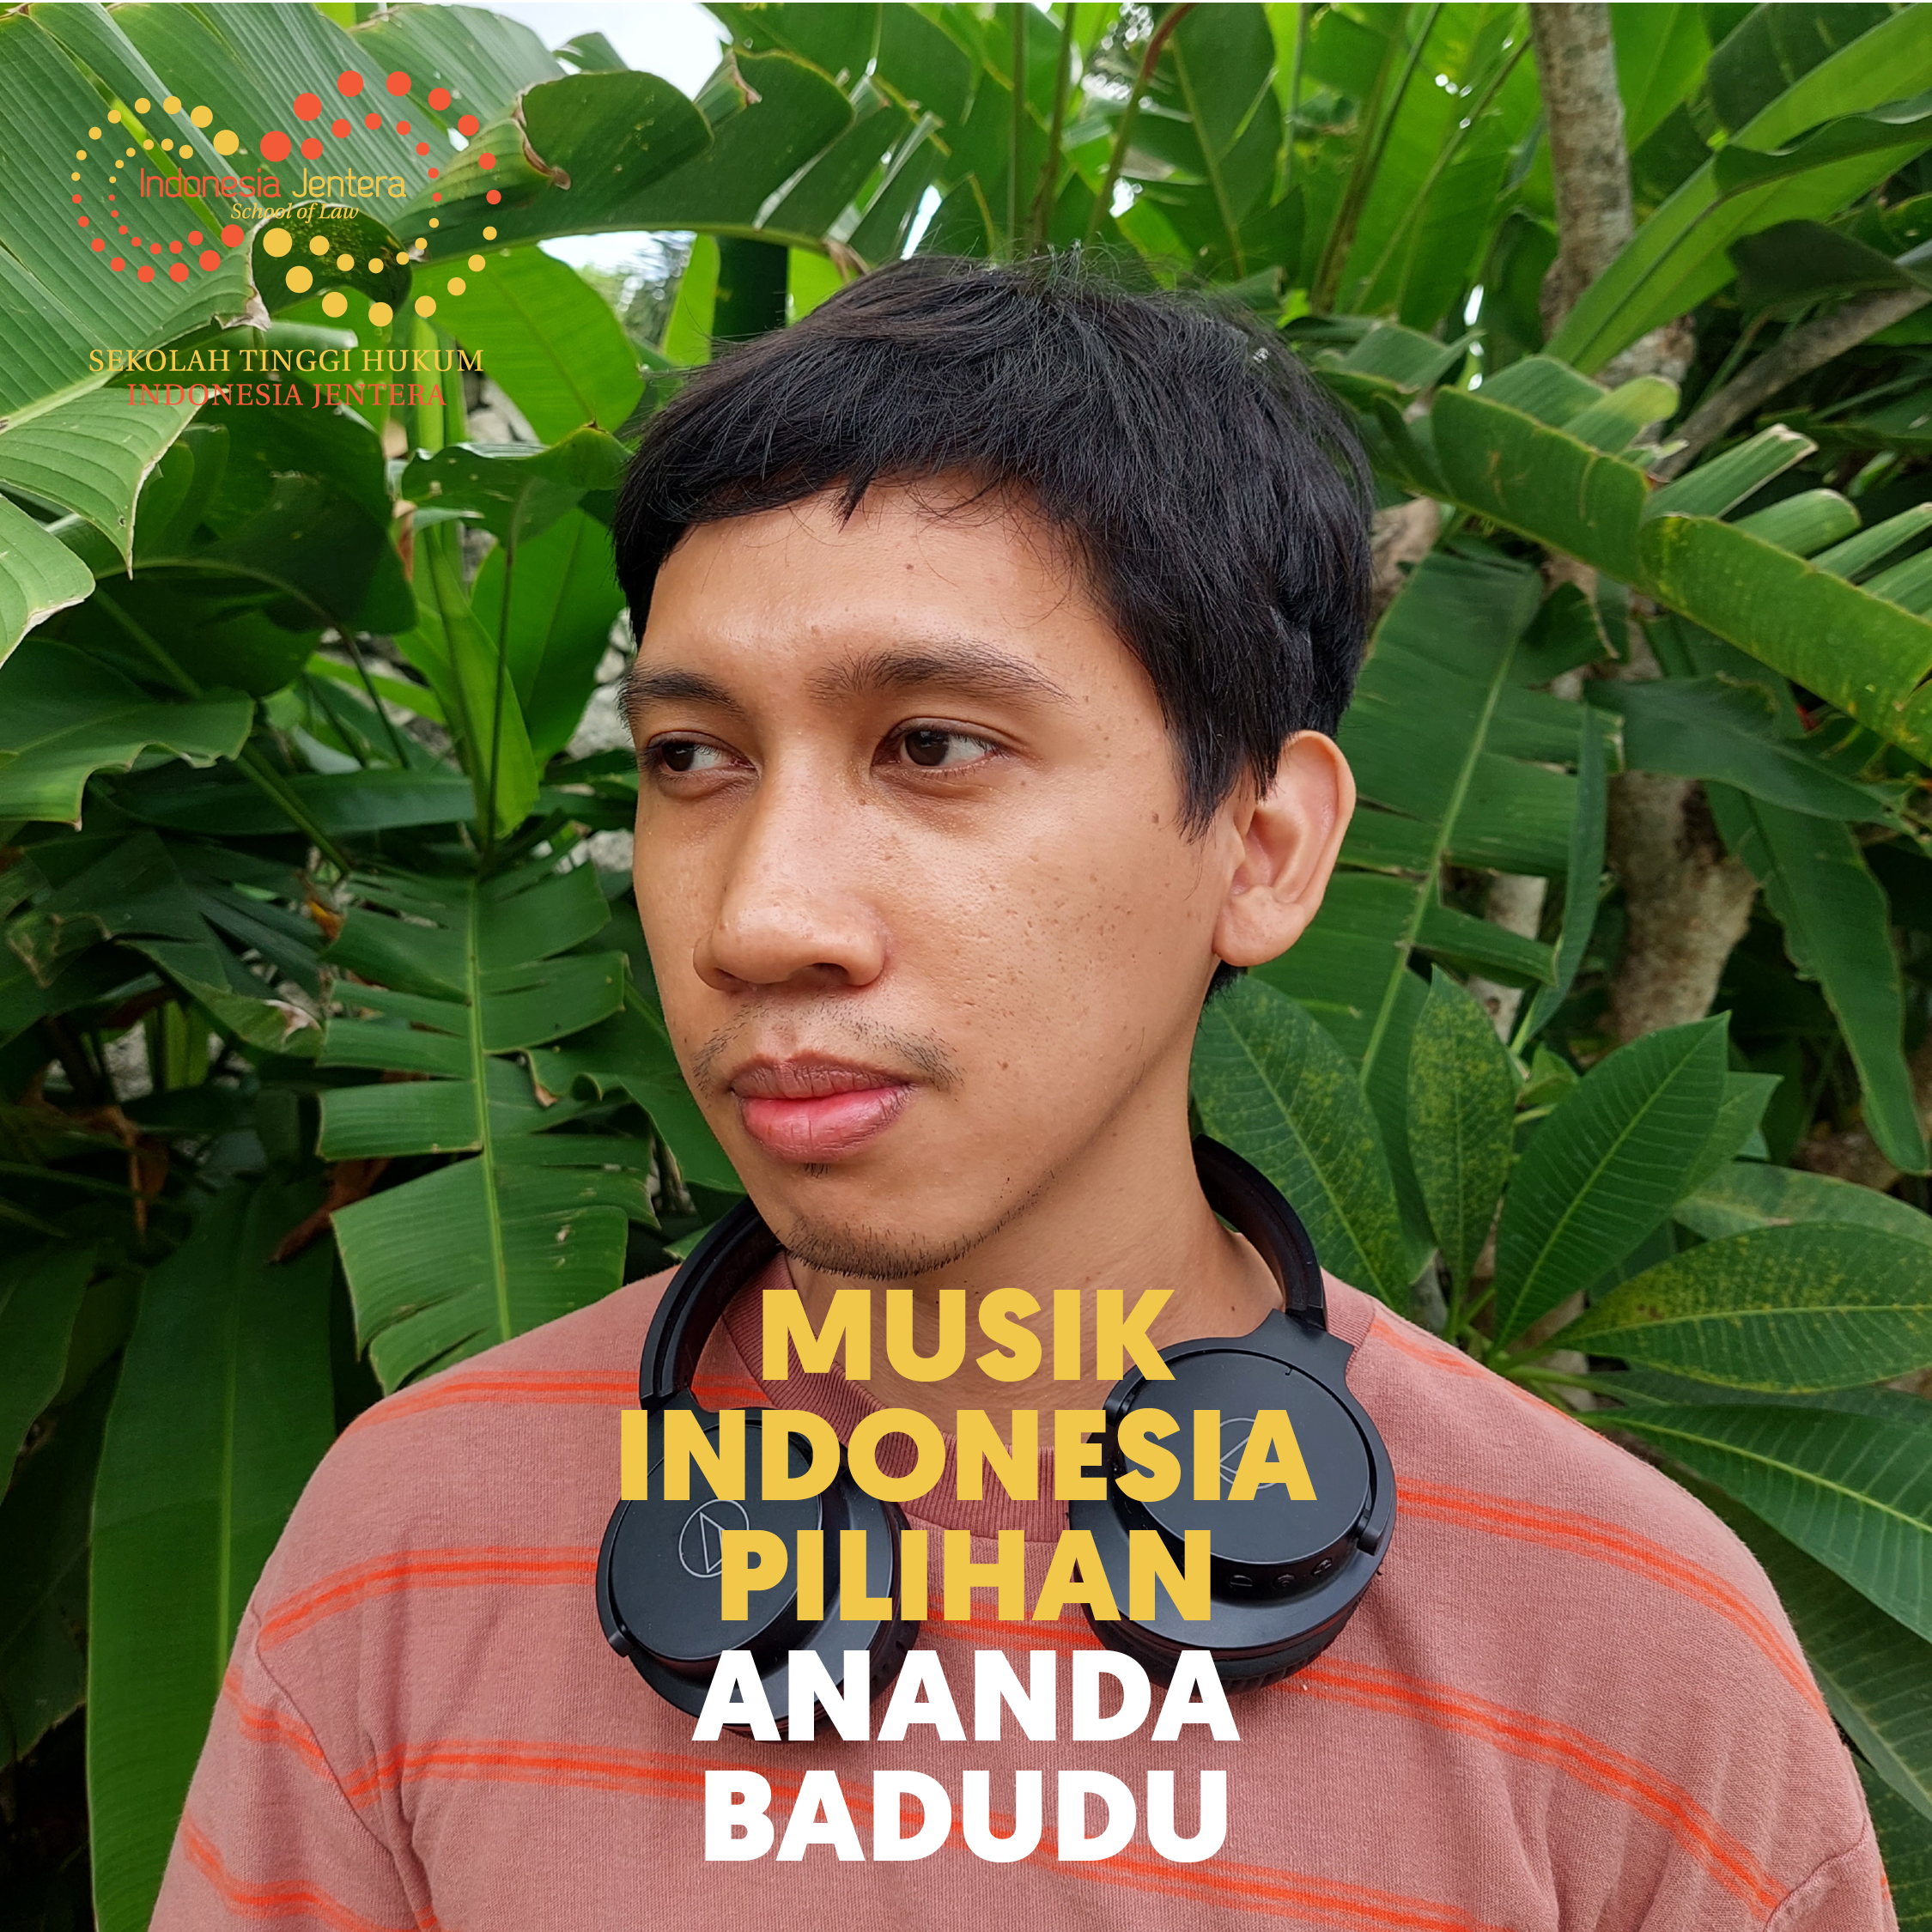 Musik Indonesia Pilihan Ananda Badudu